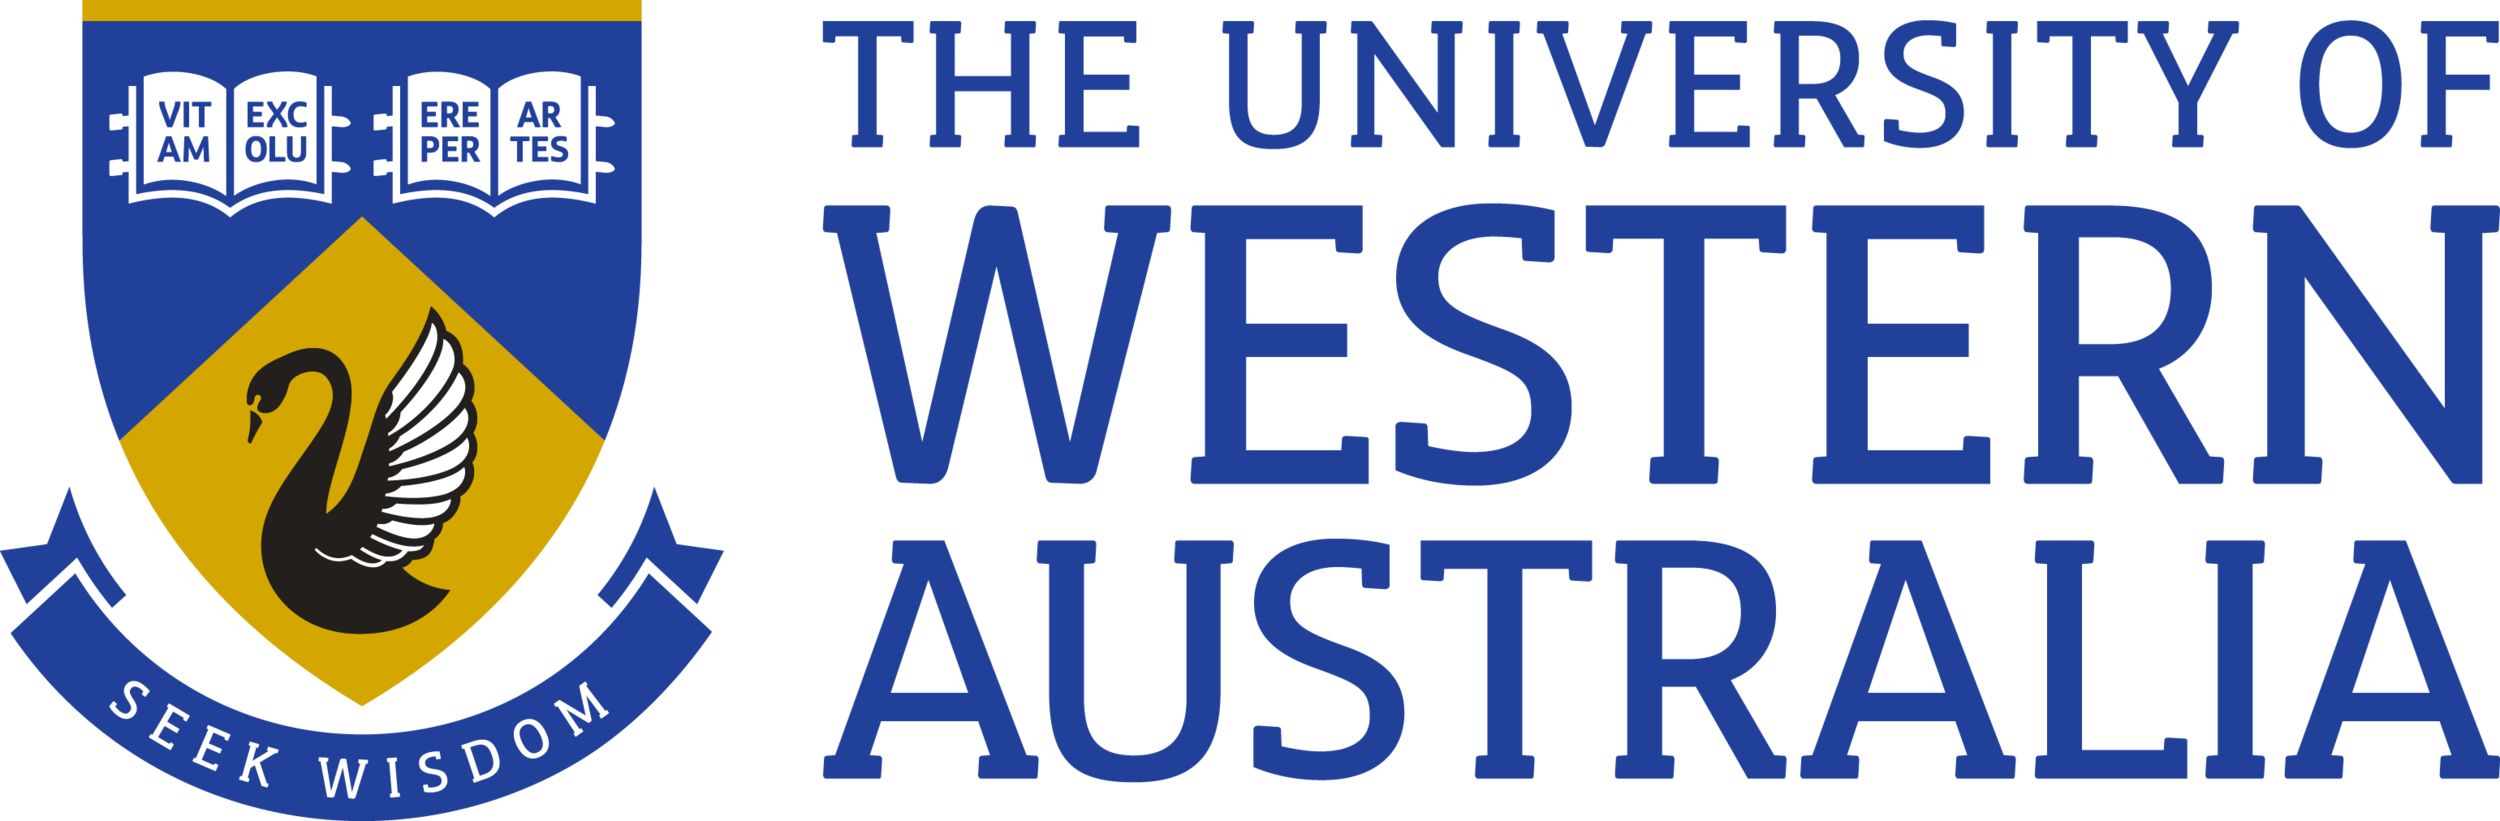 University-of-Western-Australia-Logo-Update-0620.png